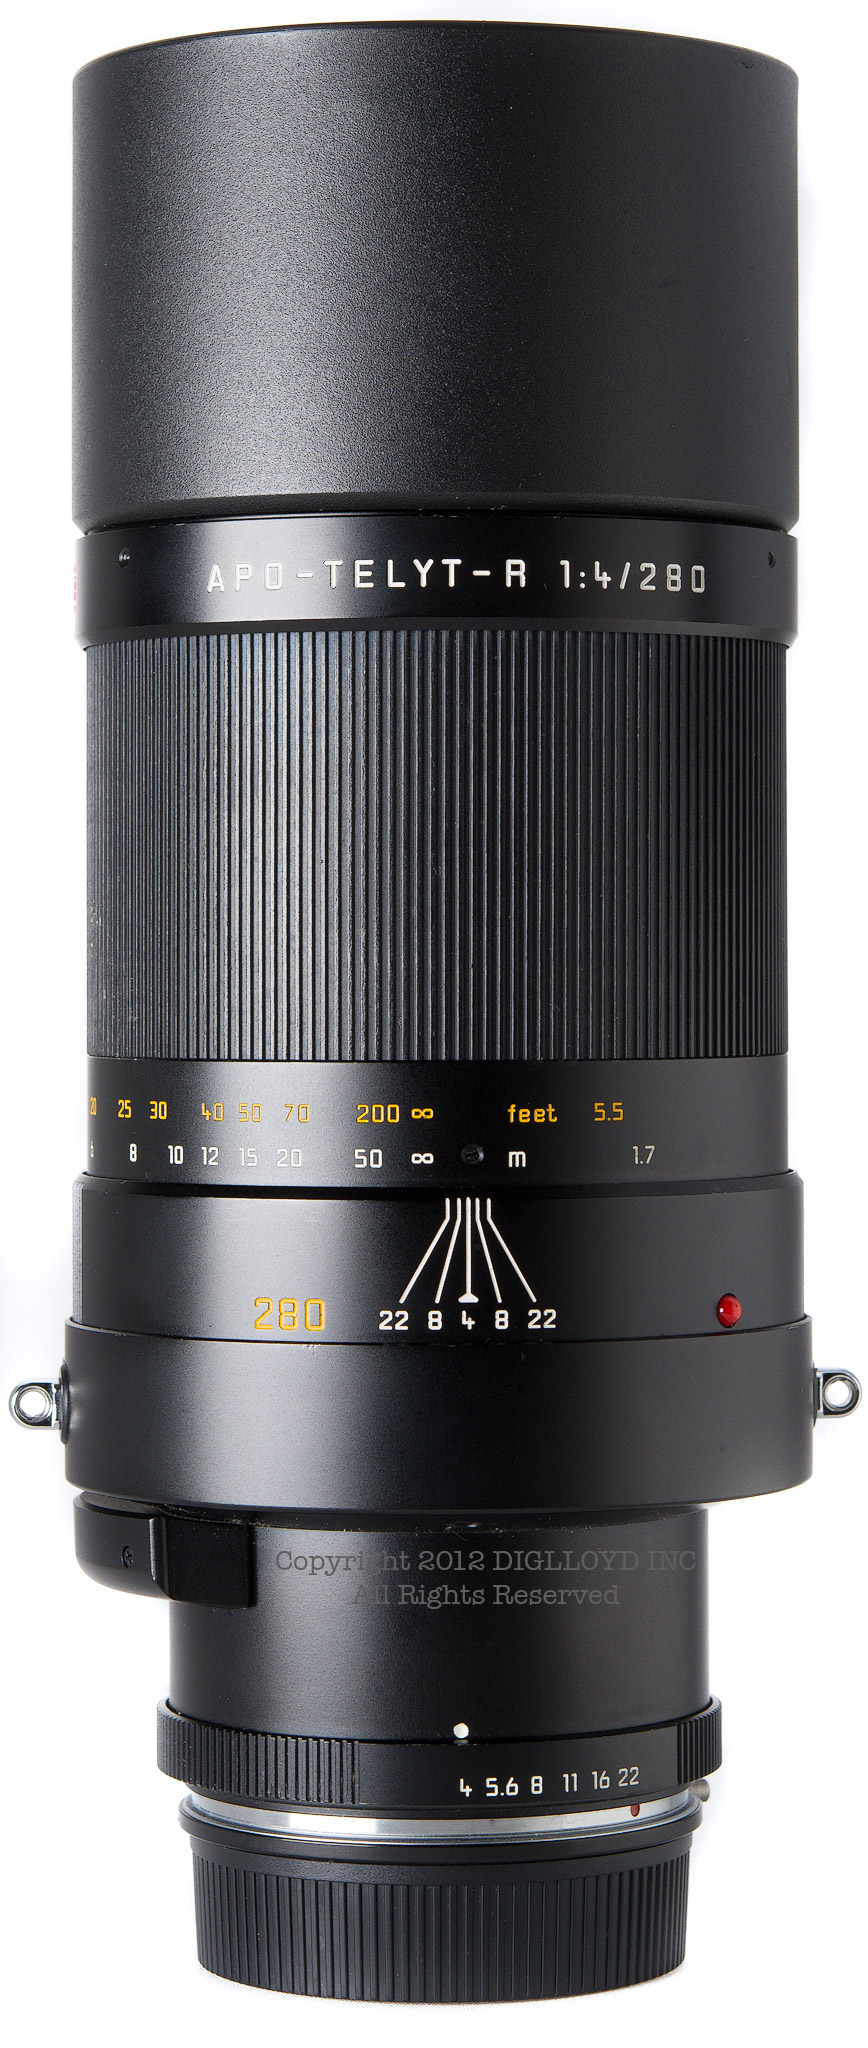 image of Leica 280mm f/4 APO-Telyt-R ASPH